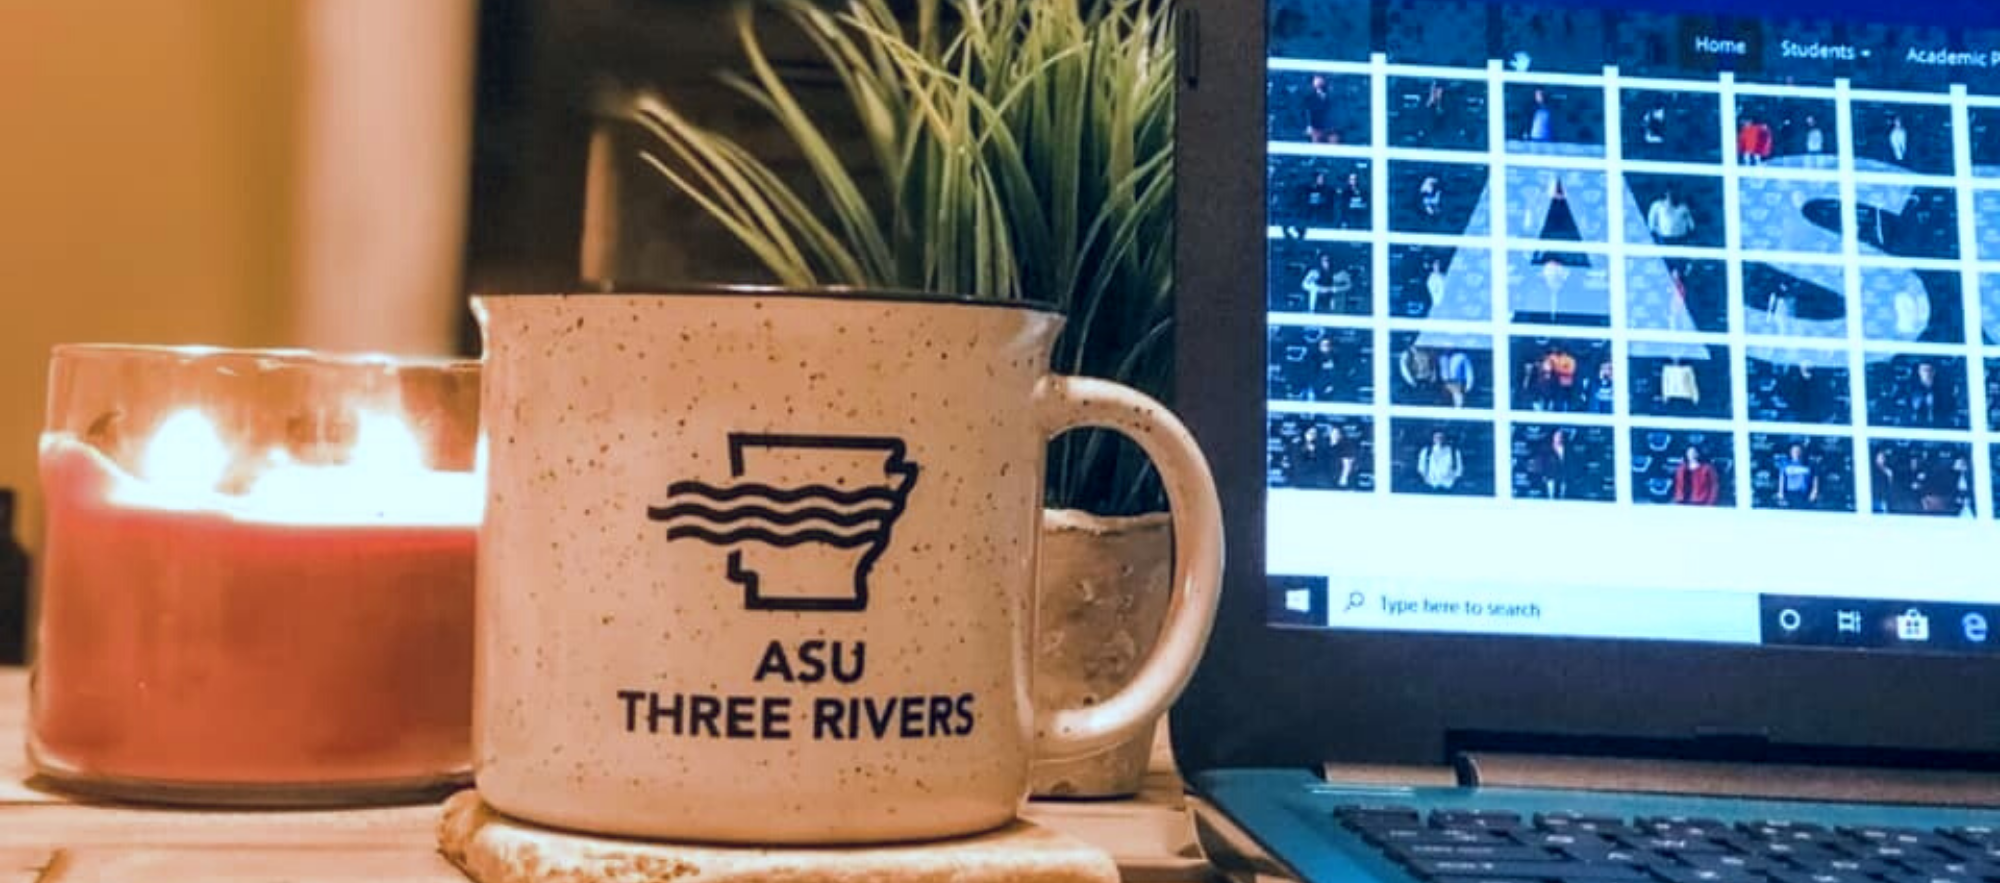 asu 3 rivers coffee mug